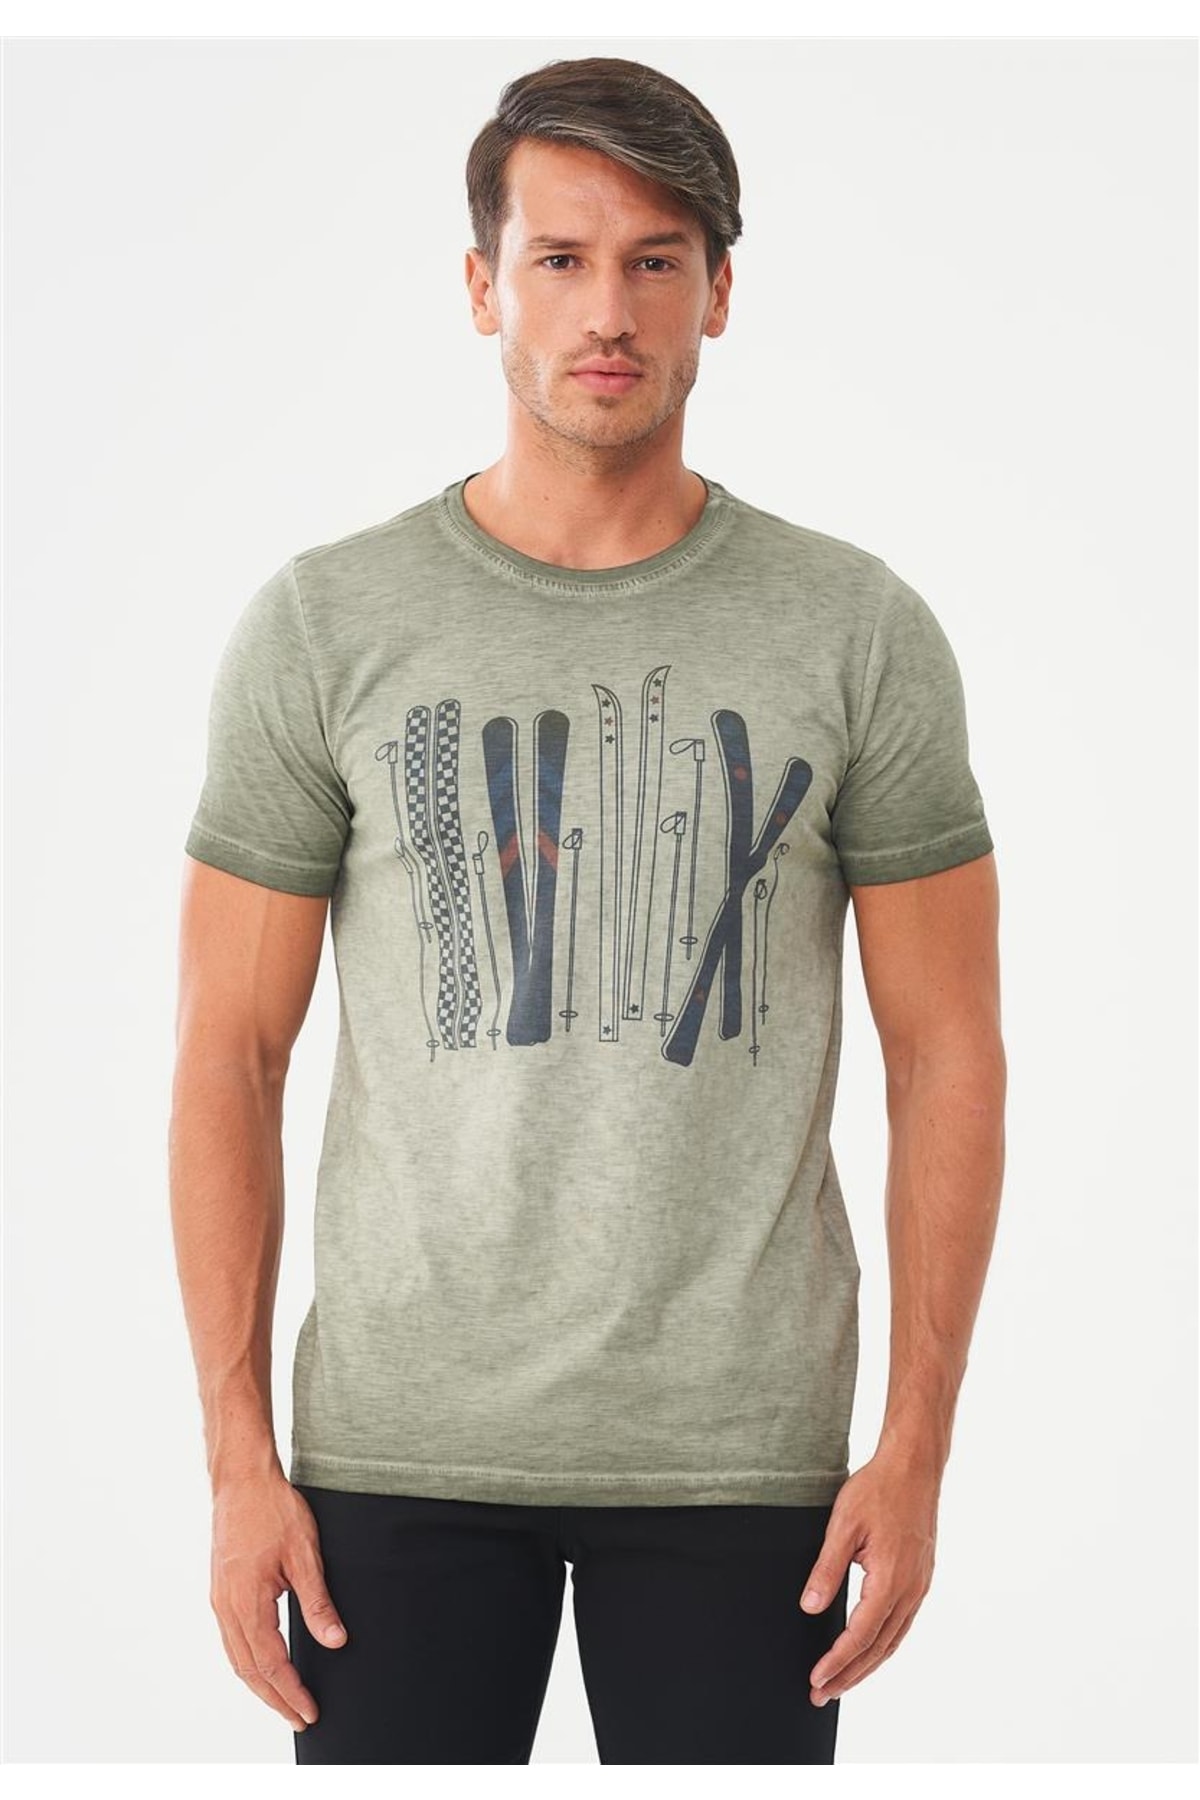 ORGANICATION T-Shirt Khaki Regular Fit